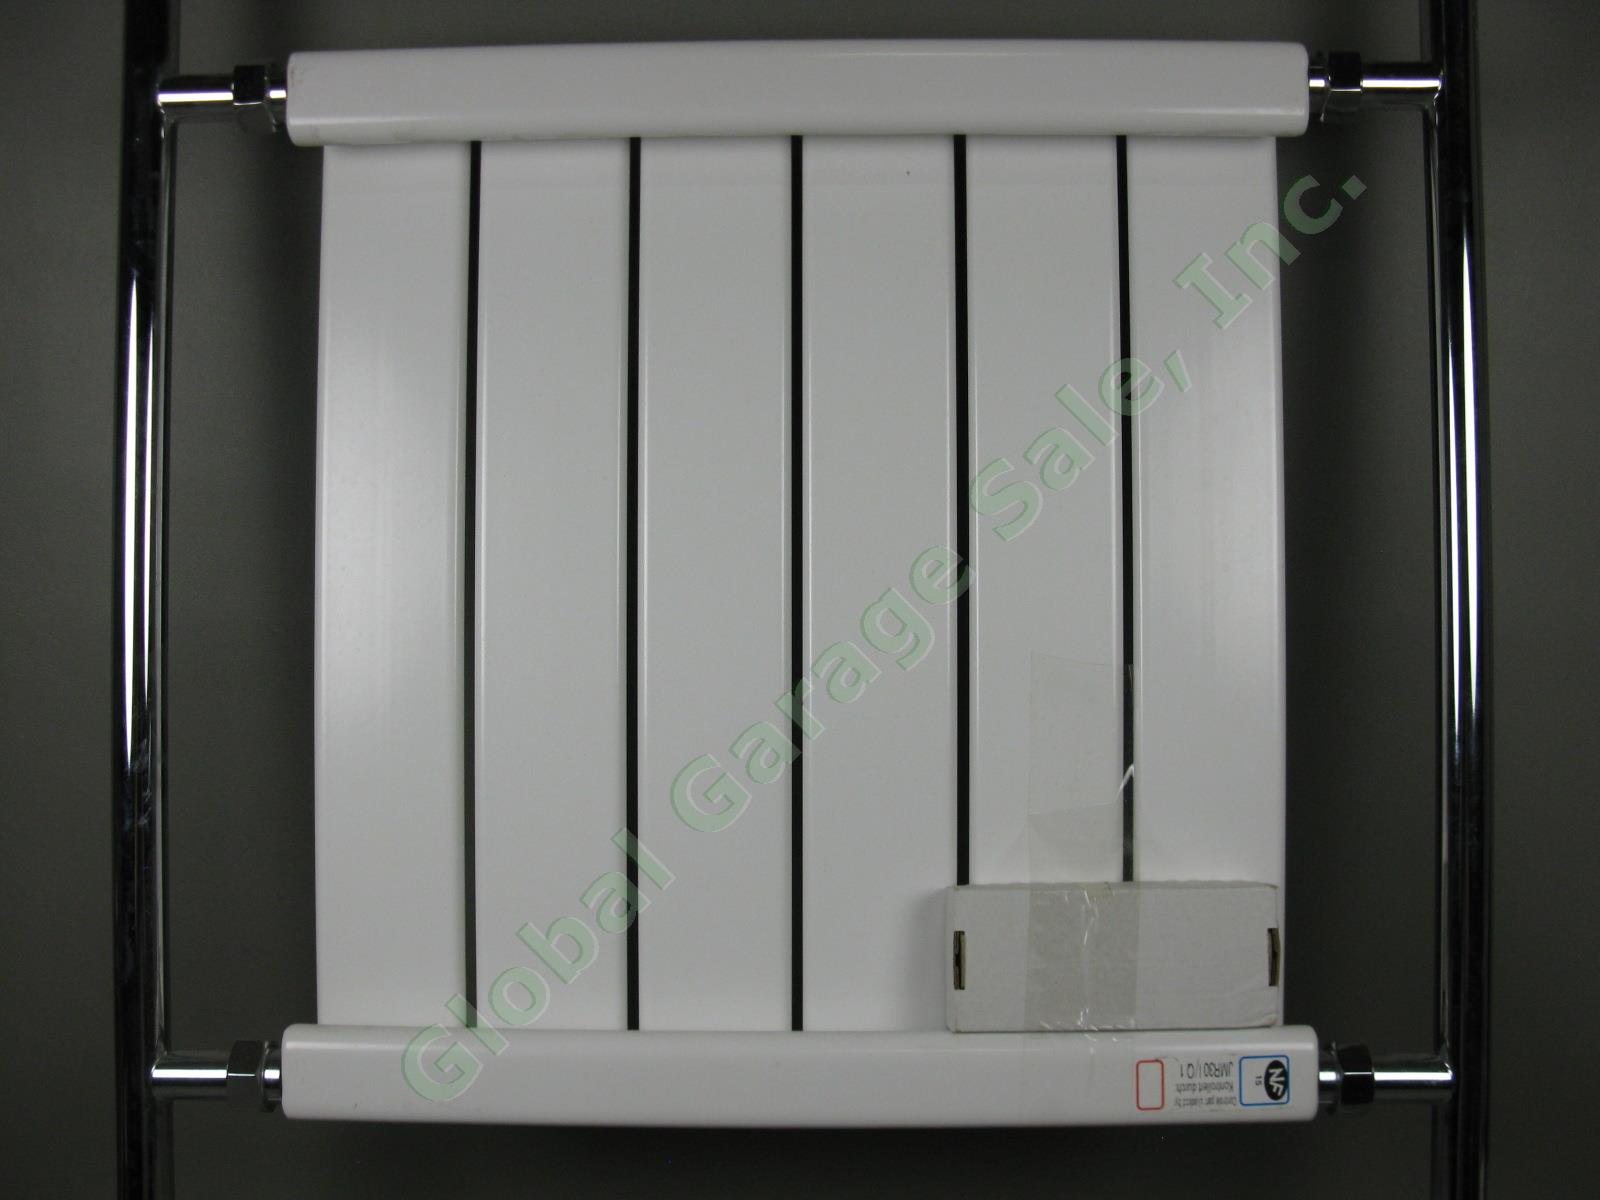 Myson Hydronic Wall Mount Towel Warmer White Model VR1? 2520 BTUH 38" x27" $2515 3